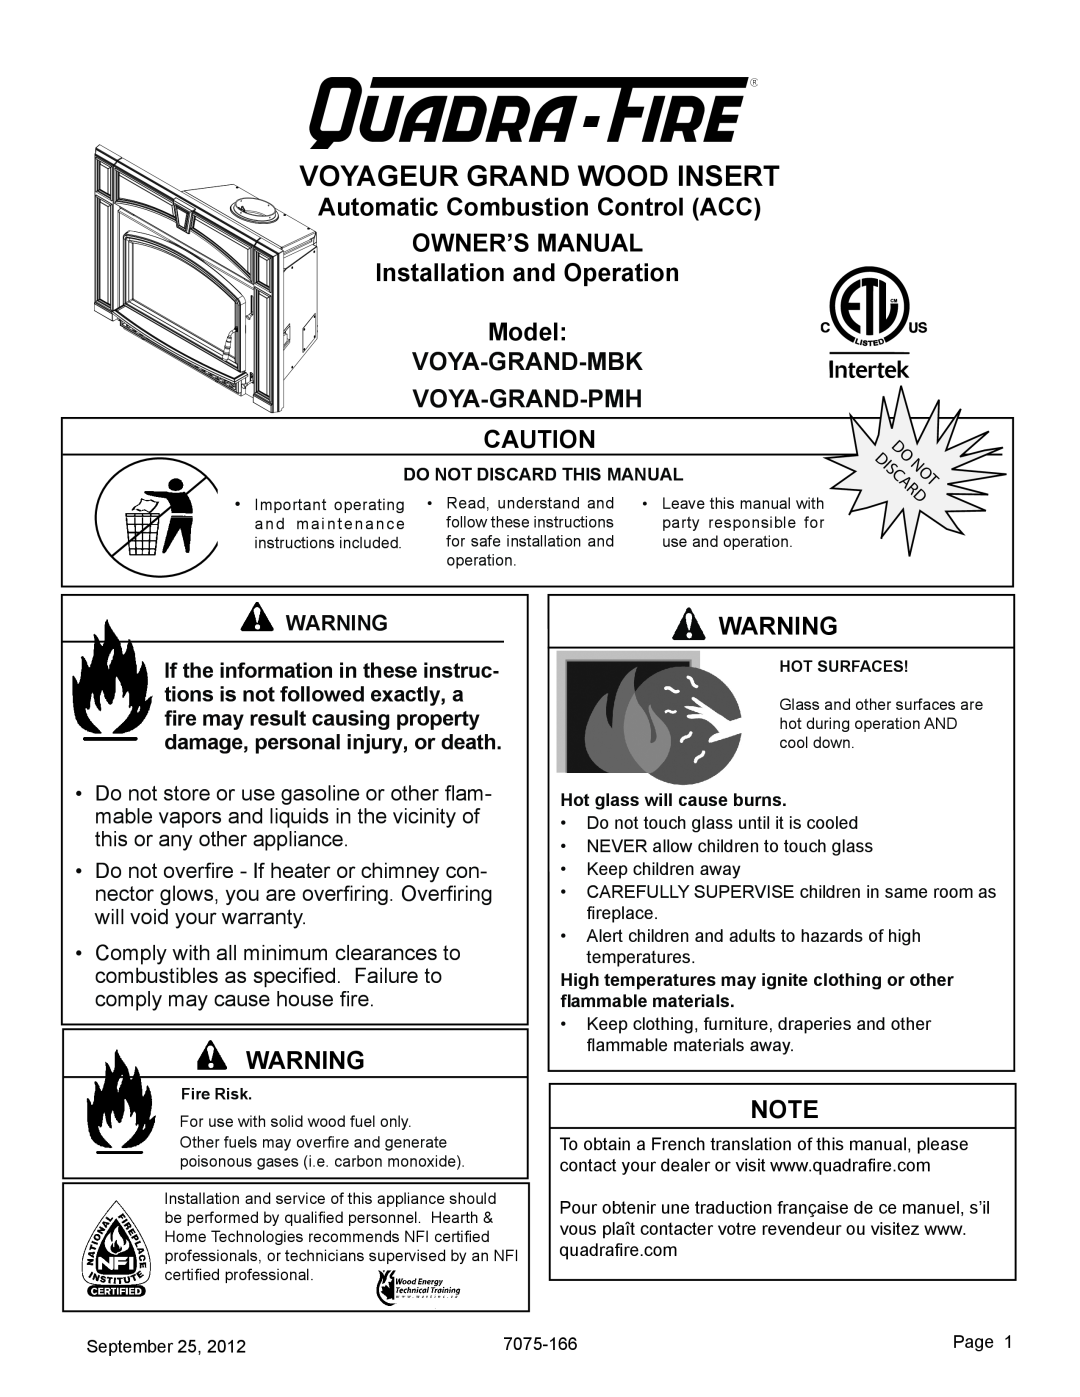 Radware owner manual Installation and Operation Model VOYA-GRAND-MBK VOYA-GRAND-PMH, Voyageur Grand Wood Insert 